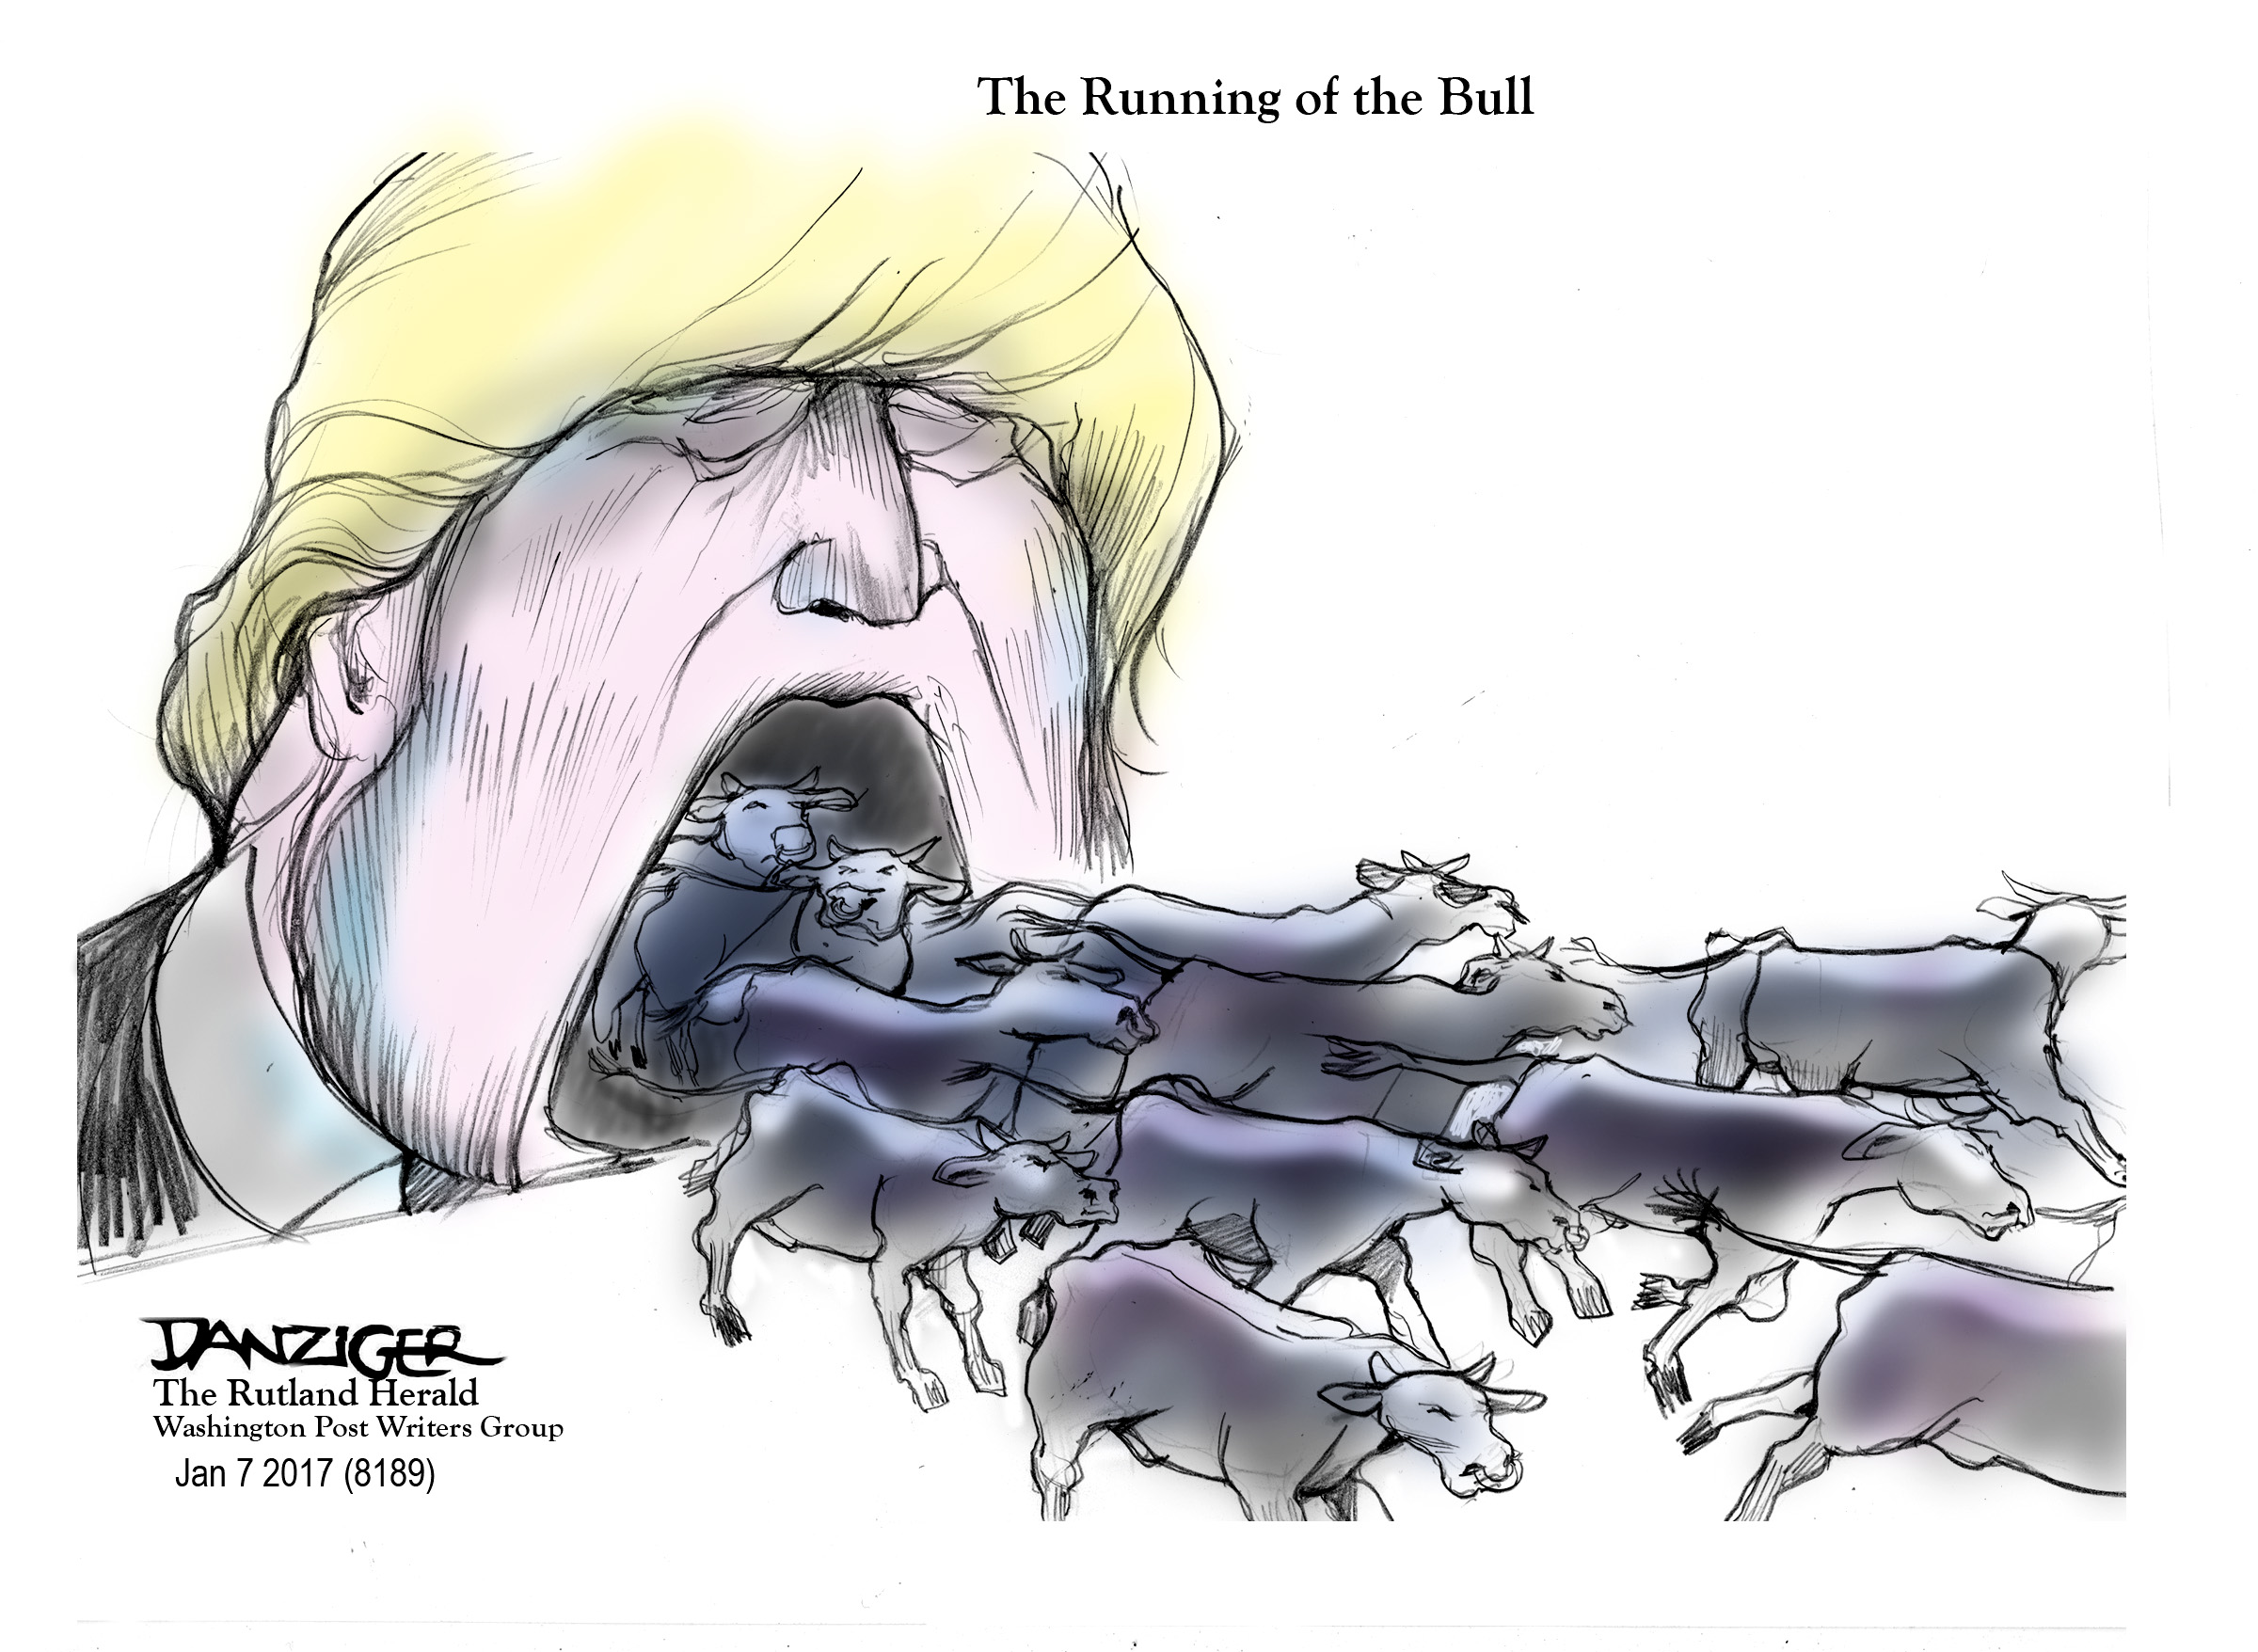 The Runnign of the Bull